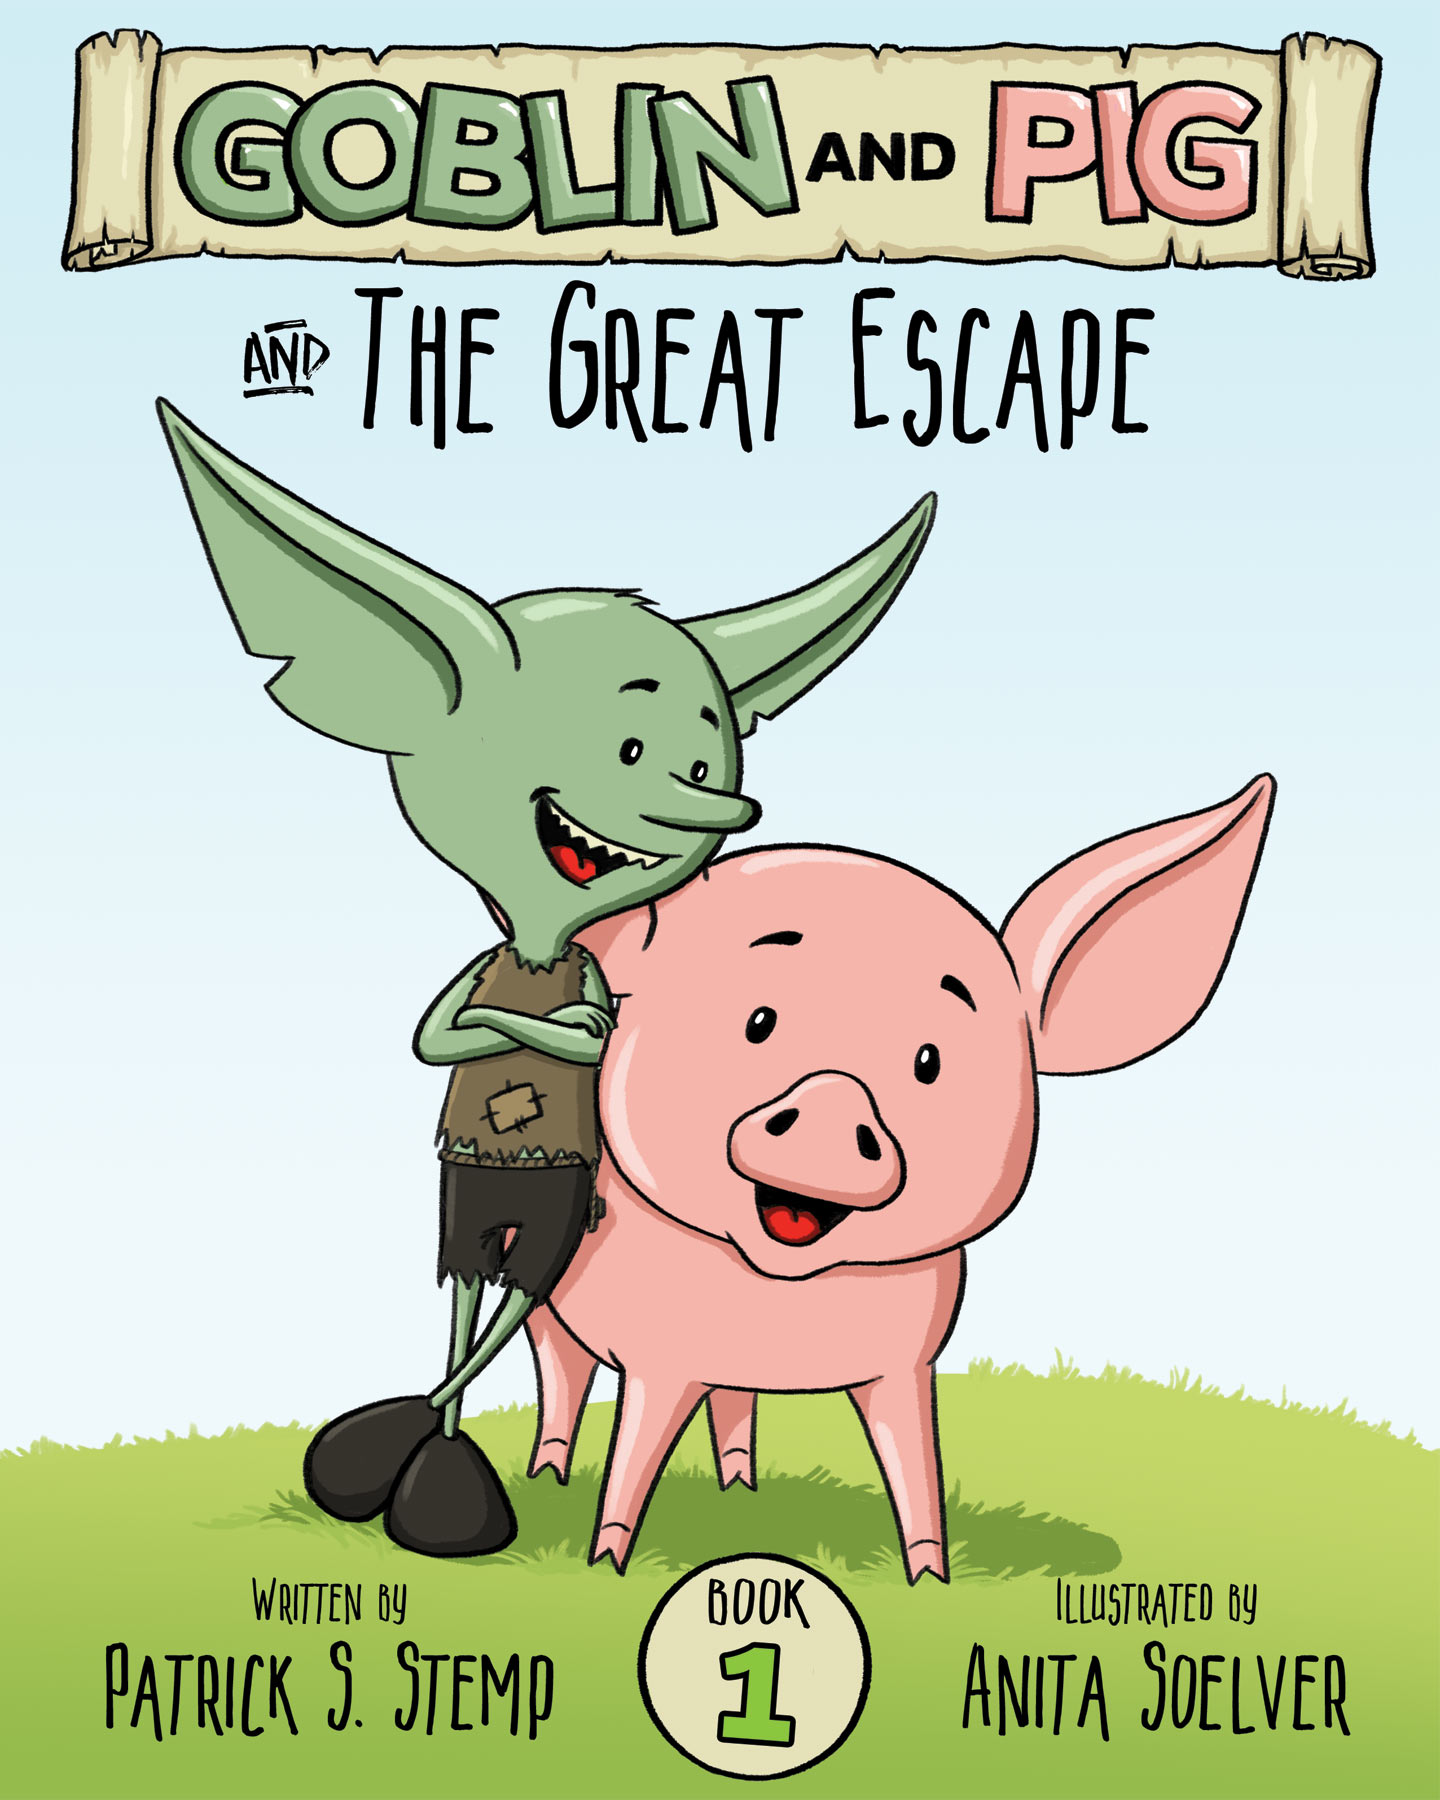 The Great Escape - a children's book by Patrick Stemp & Anita Soelver